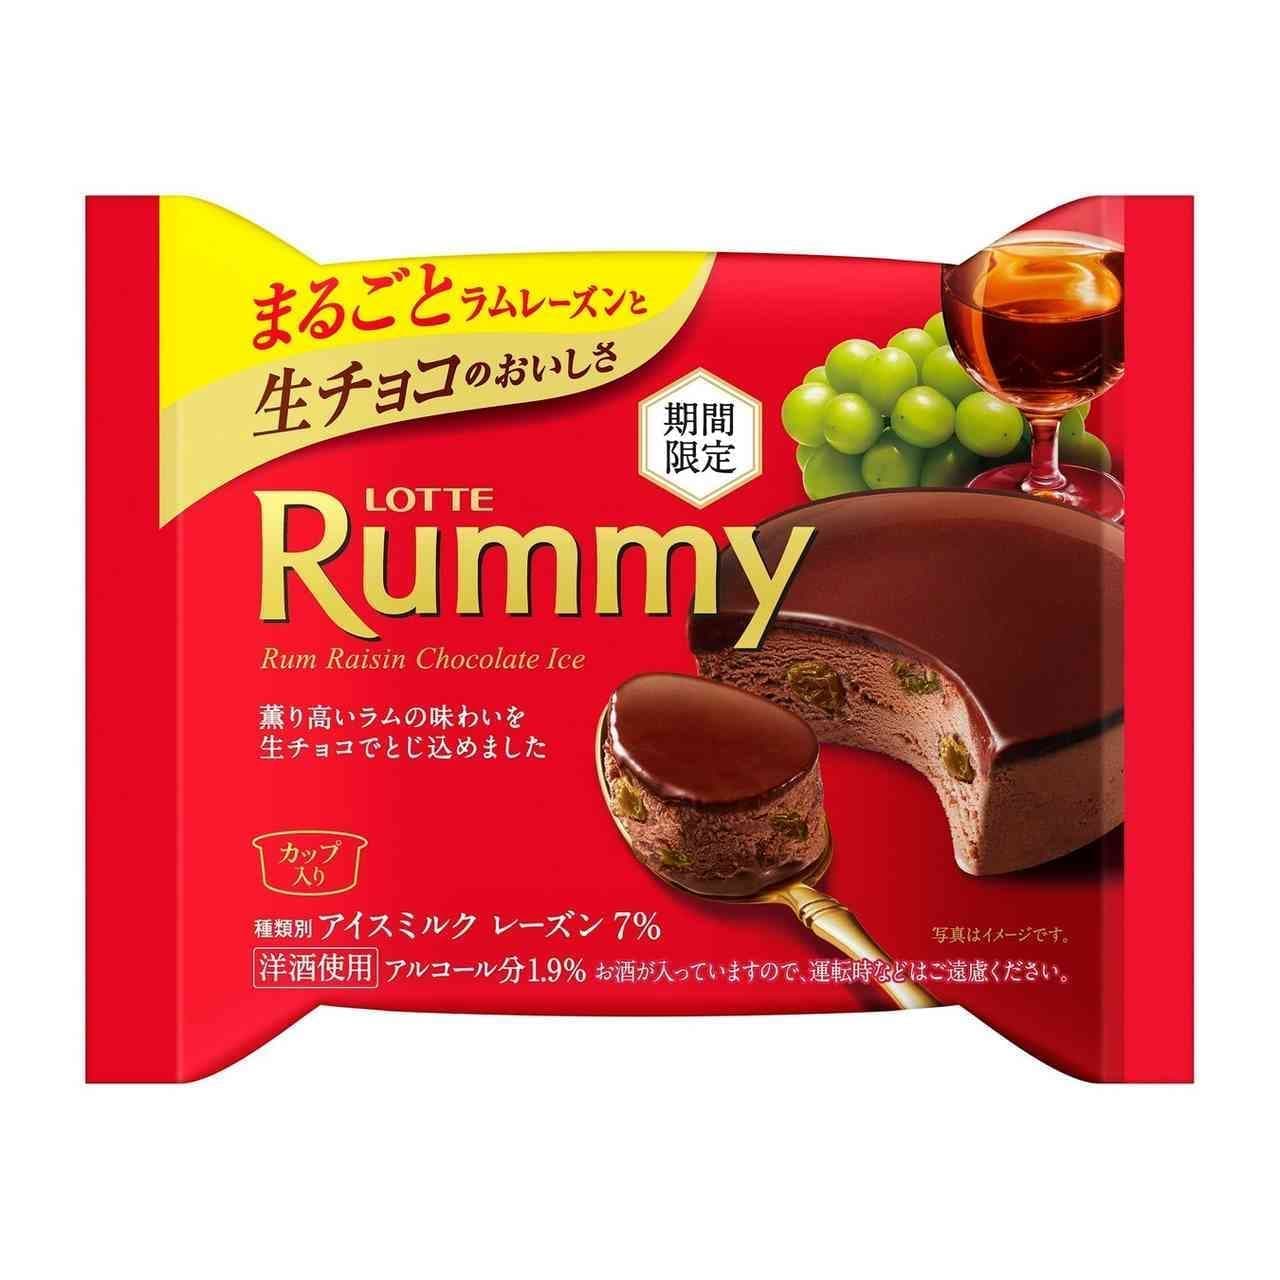 Lotte "Rummy Chocolate Ice Cream